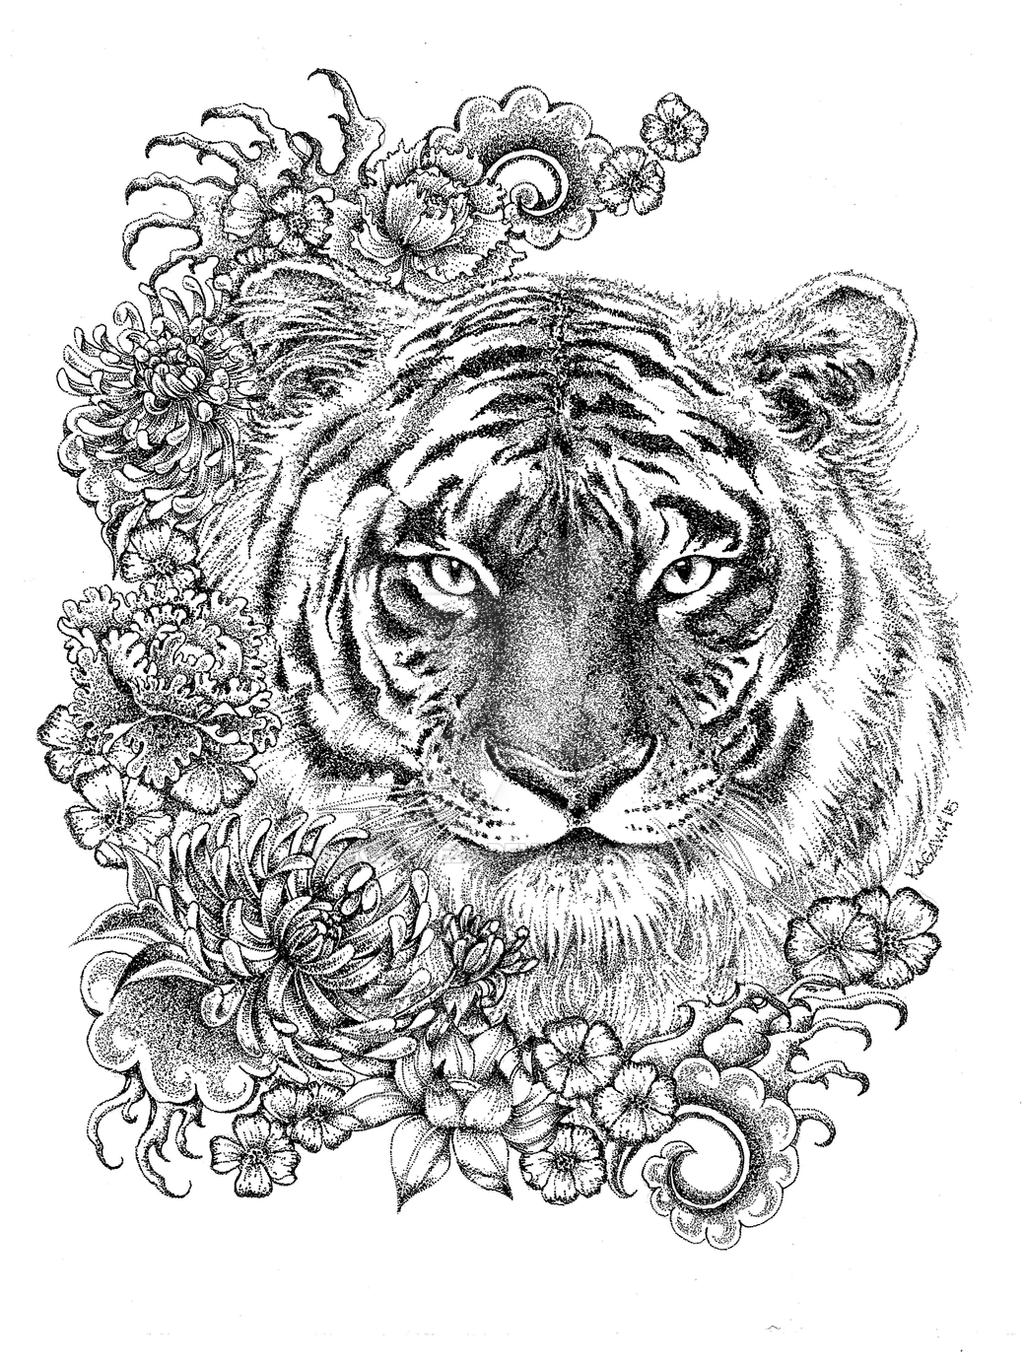 Year of the Tiger by LKBurke29 on DeviantArt